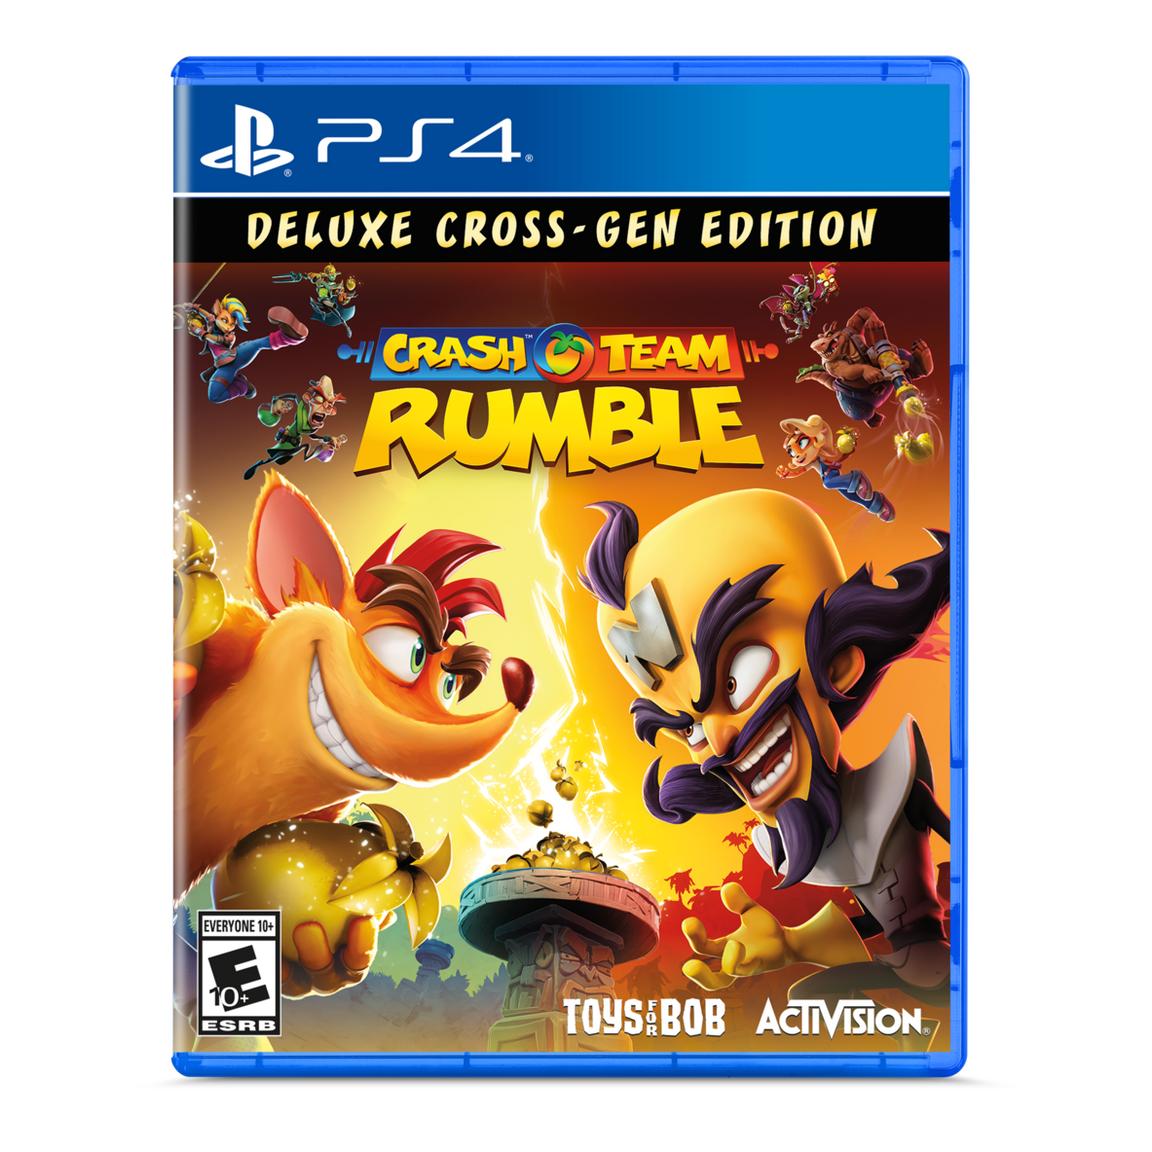 игра crash team rumble deluxe edition ps5 Видеоигра Crash Team Rumble: Deluxe Cross Gen Edition - PlayStation 4